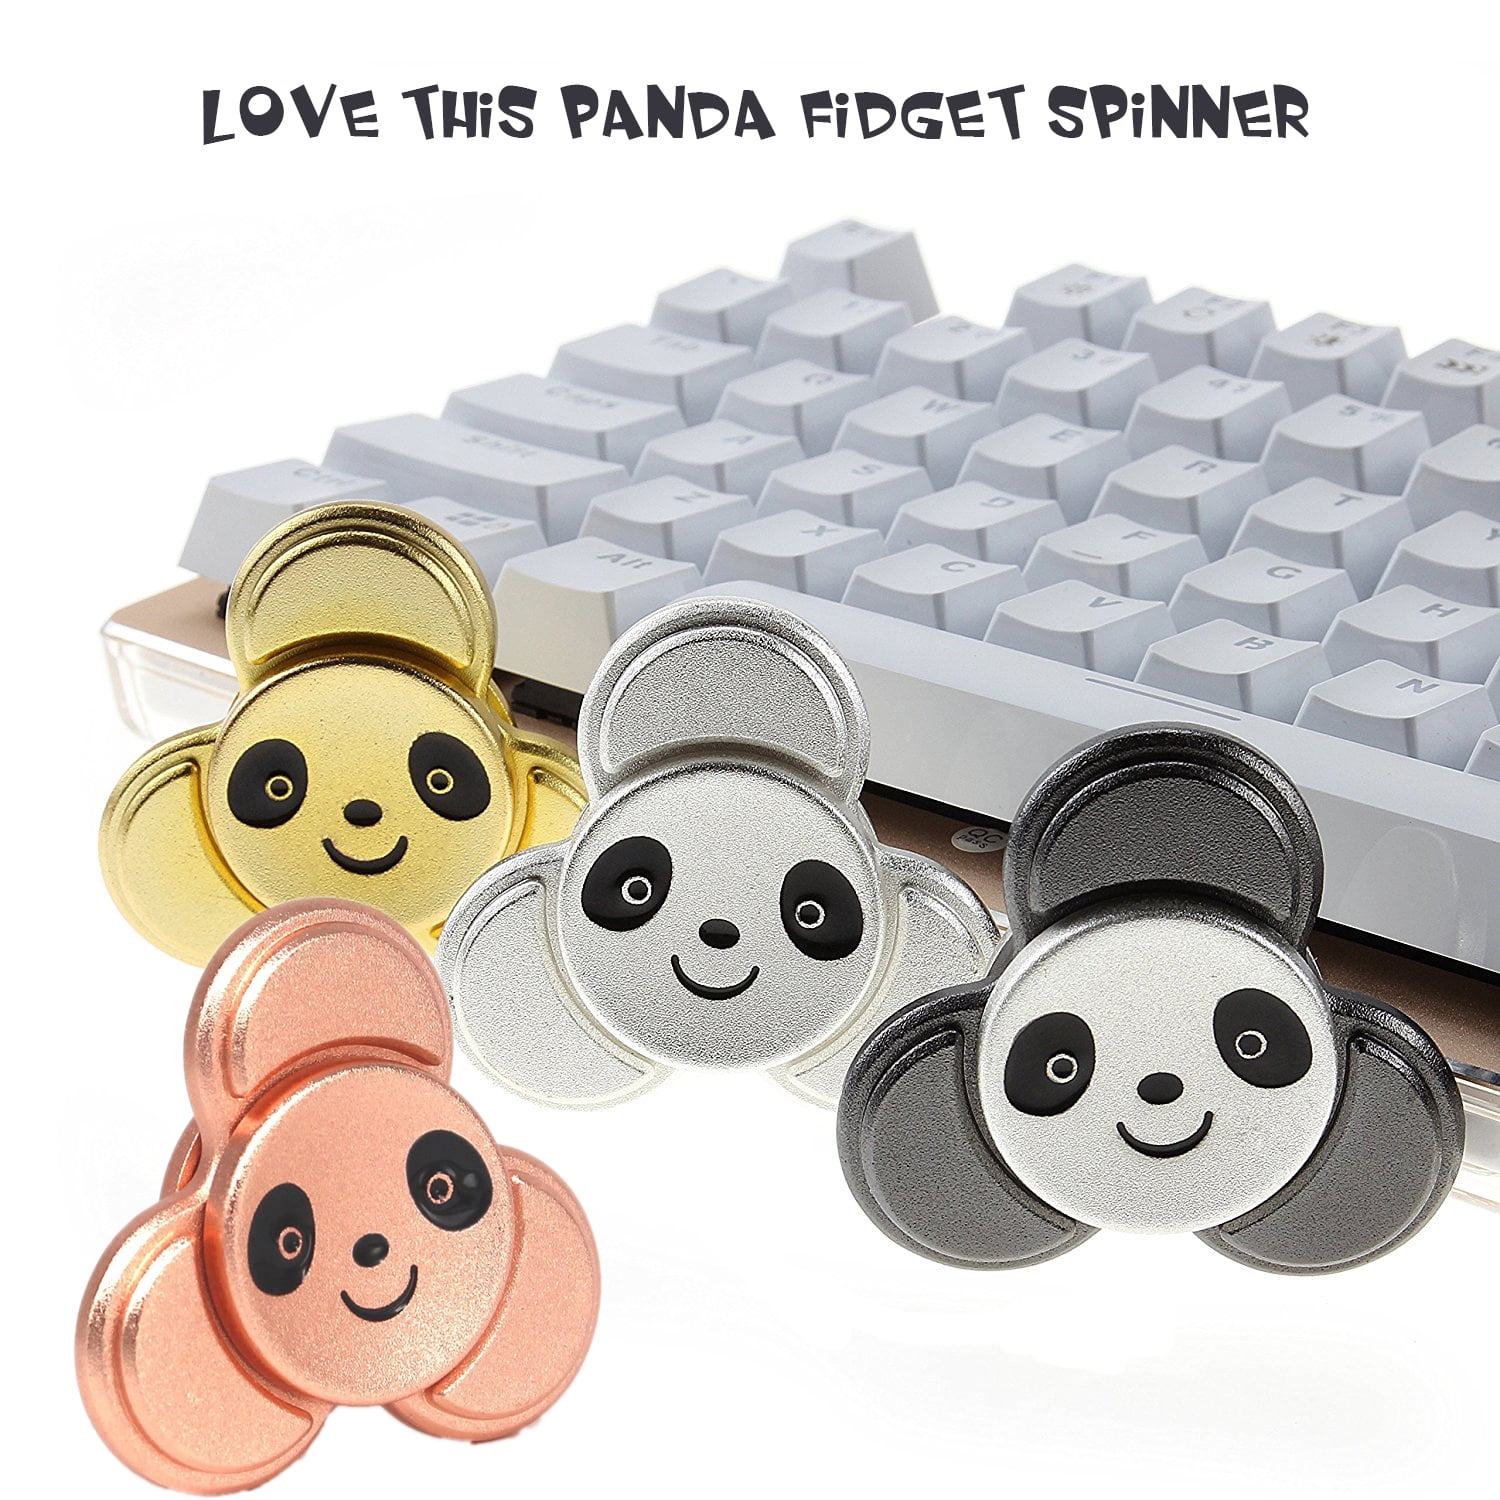 Fidget Spinner Panda Face High Speed EDC ADHD 3D Focus Spinning Toys 